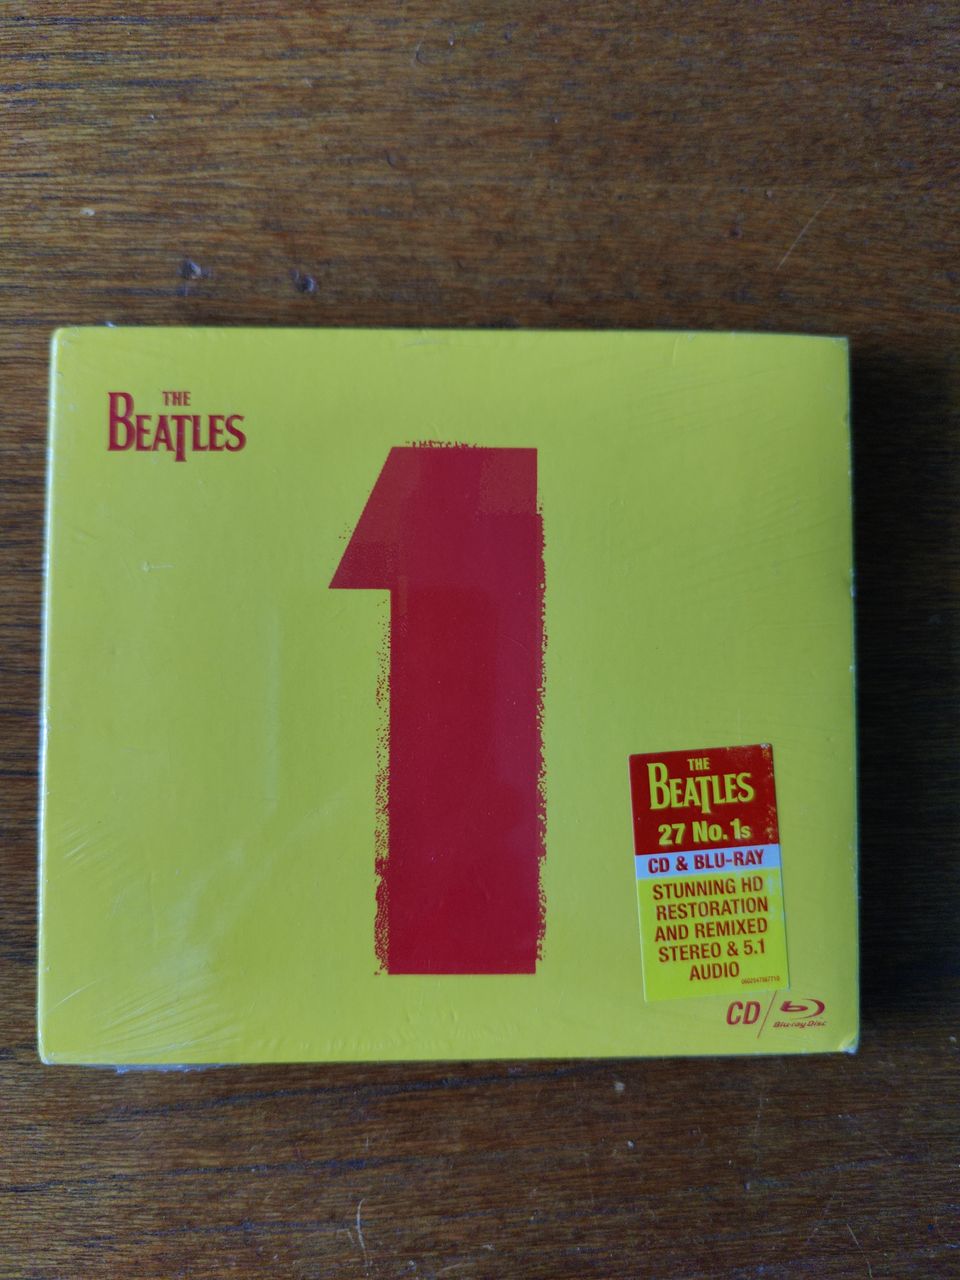 The Beatles 1 CD + BLU-RAY